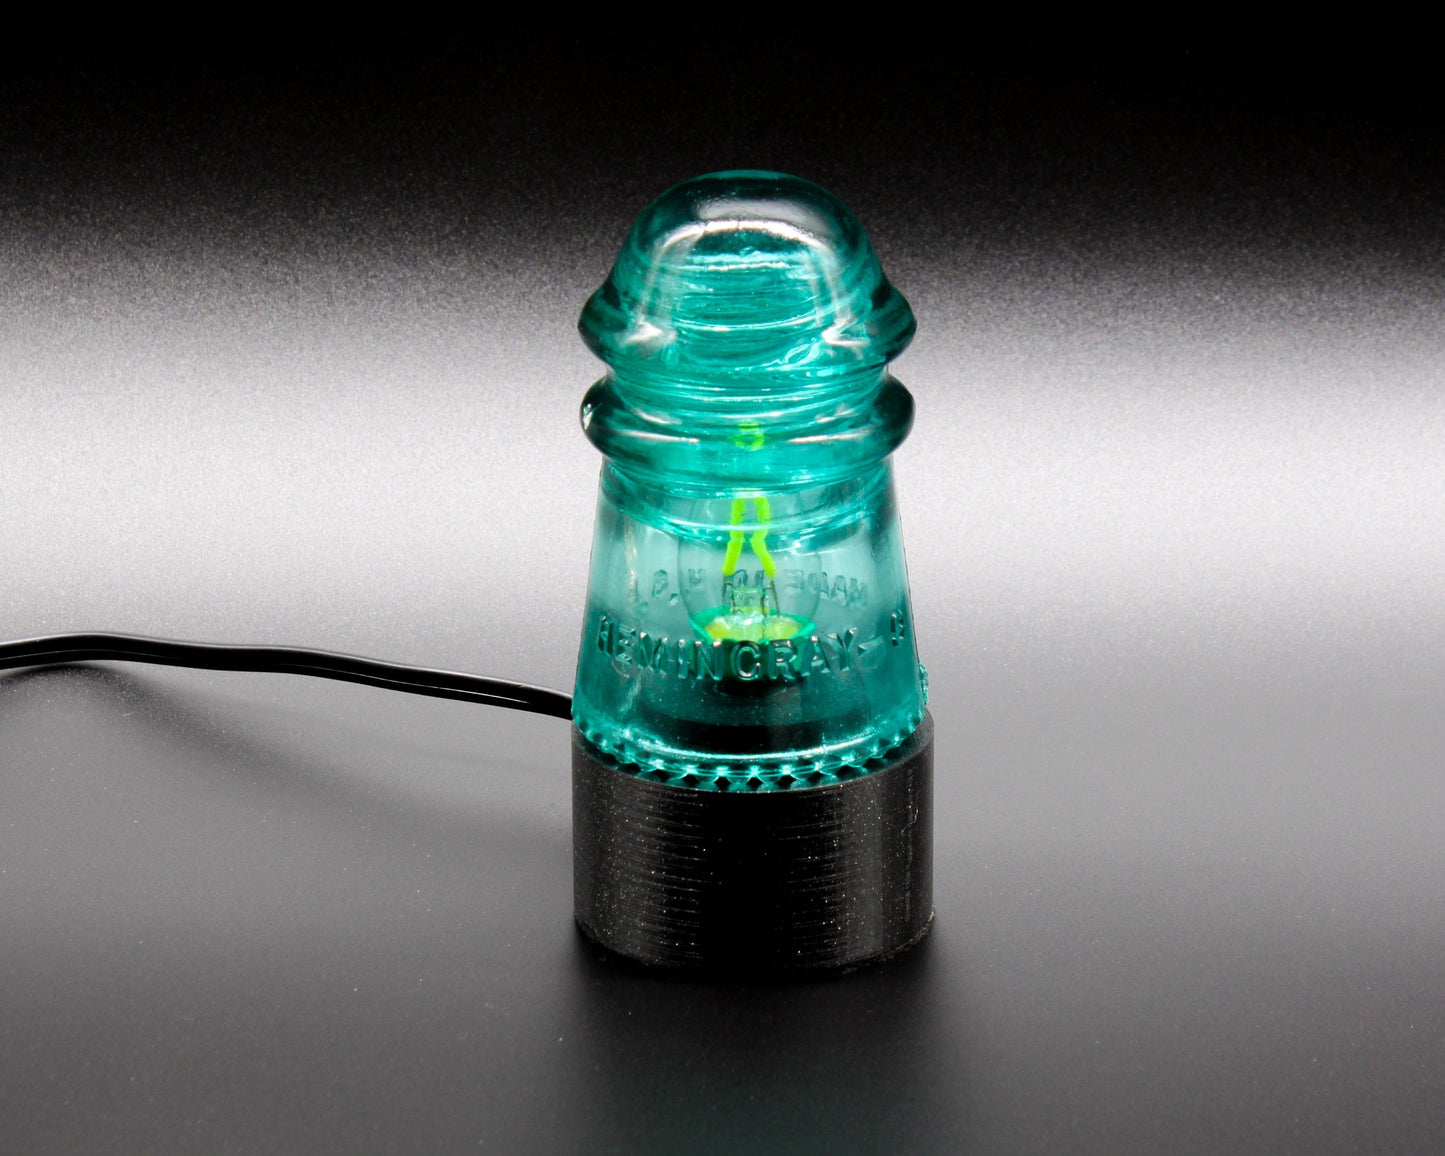 LightAndTimeArt Industrial lamp "The Small Aqua Lantern" Insulator Lamp, Industrial Lighting, Man Cave Deco, Neo Victorian Lamp design, Cyberpunk Lamp